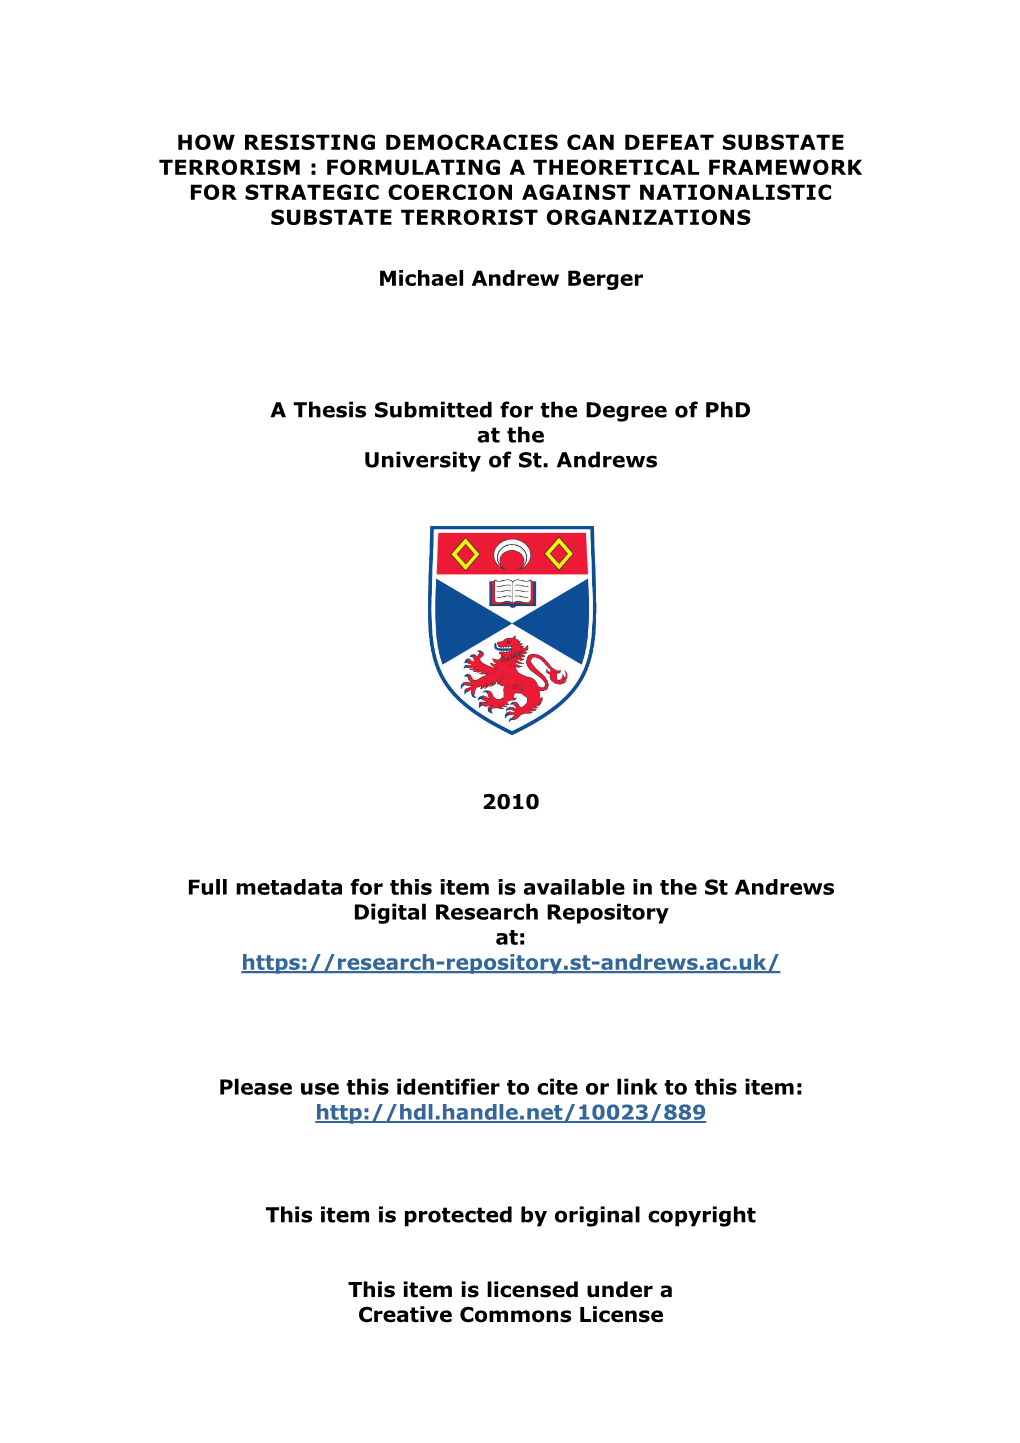 Michael Andrew Berger Phd Thesis.PDF